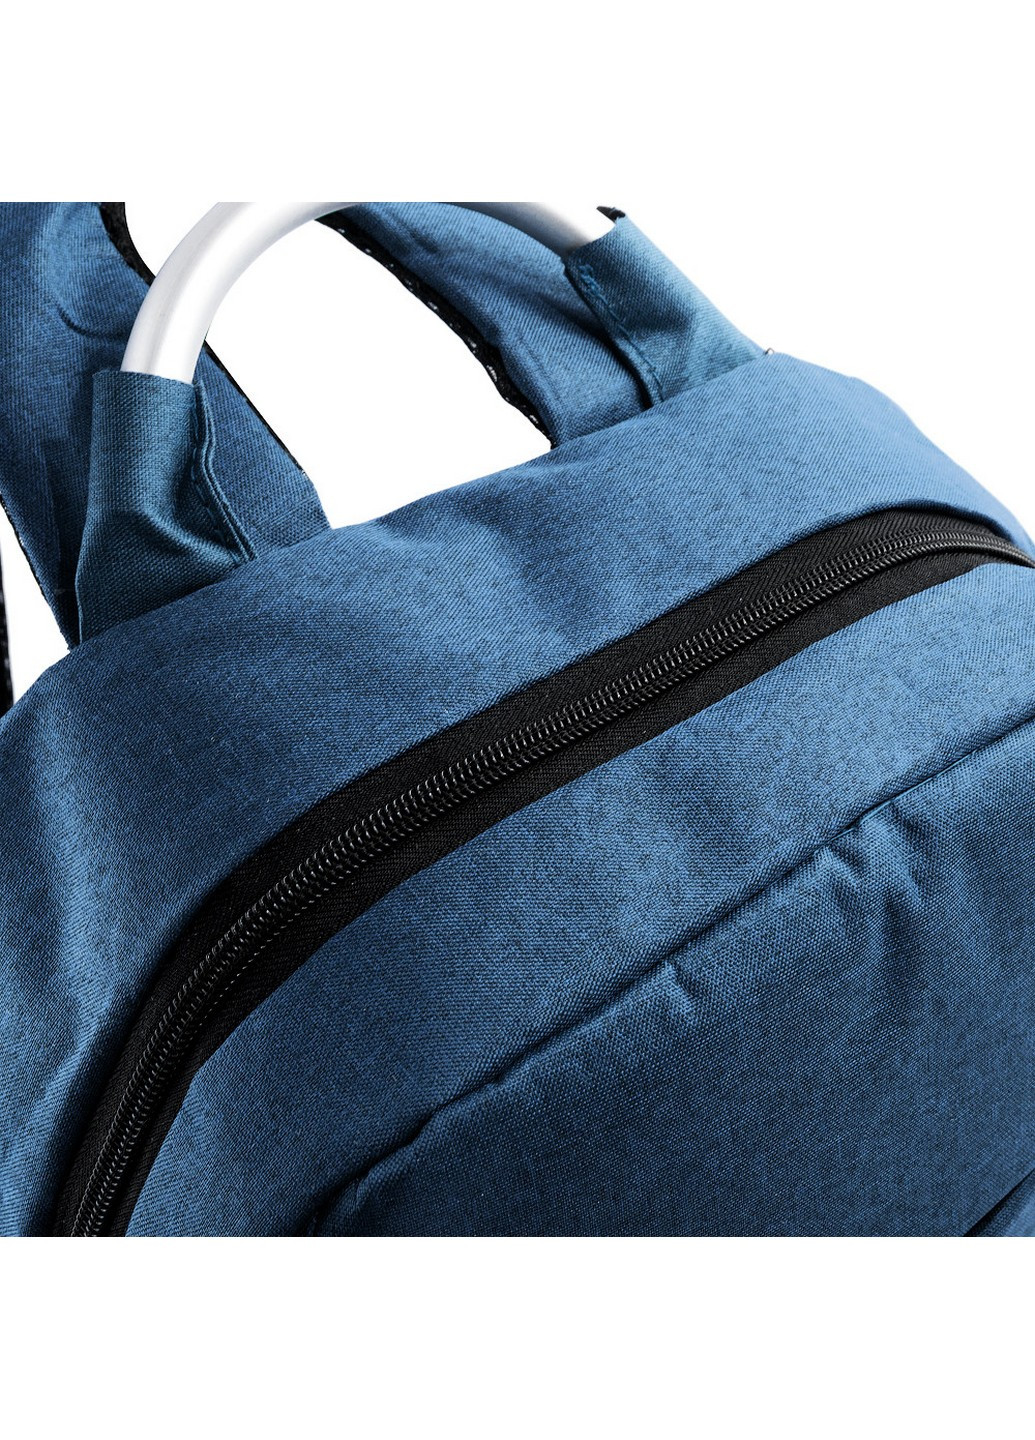 Мужской смарт-рюкзак 39х42х13 см Valiria Fashion (255405060)